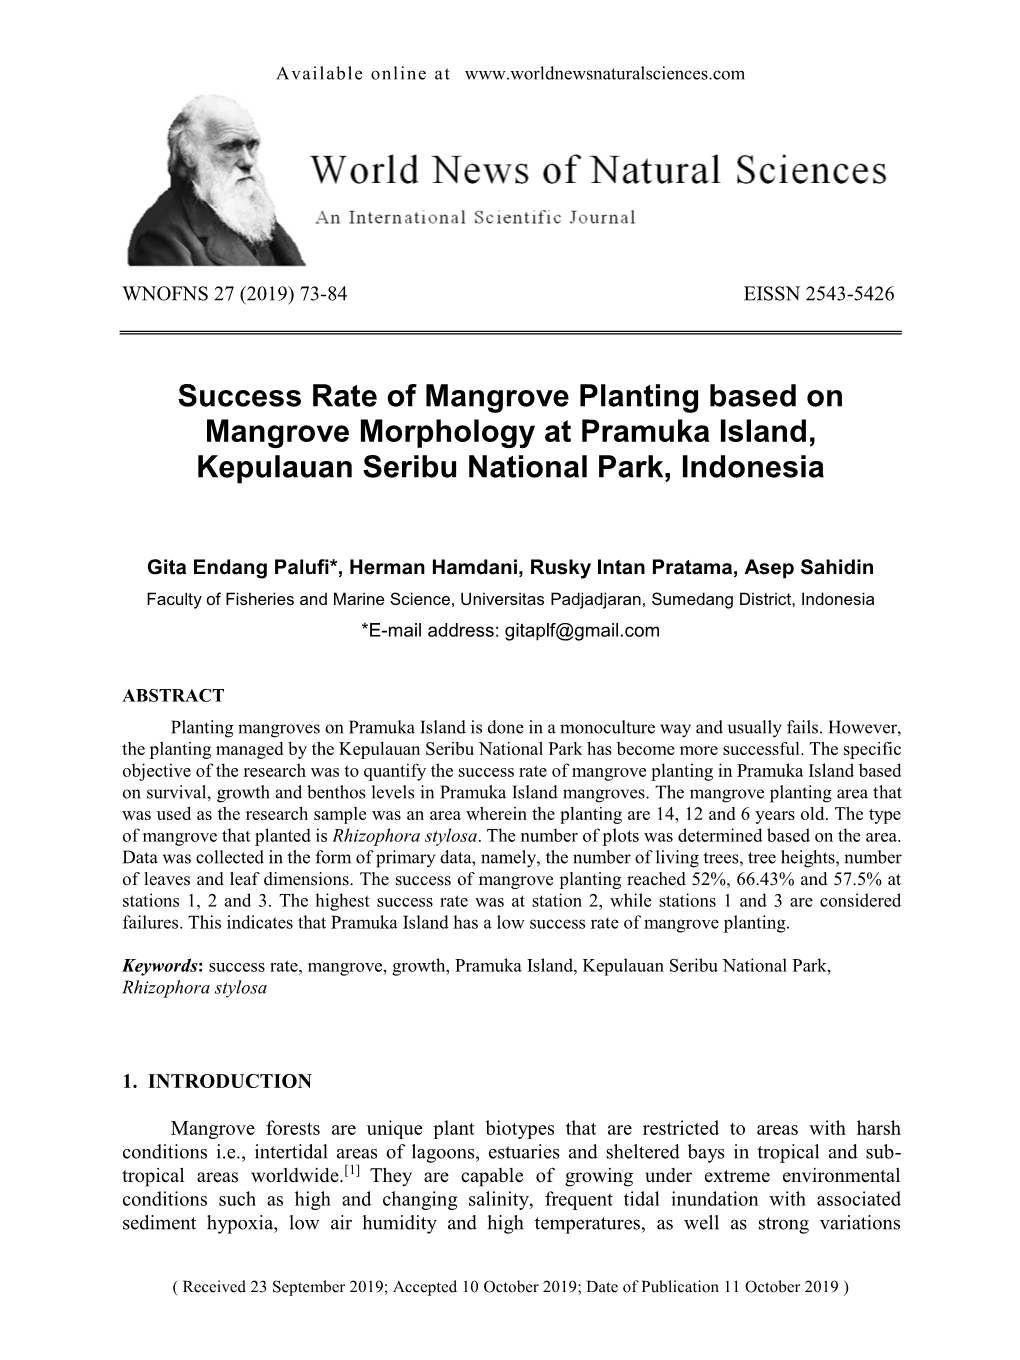 Success Rate of Mangrove Planting Based on Mangrove Morphology at Pramuka Island, Kepulauan Seribu National Park, Indonesia